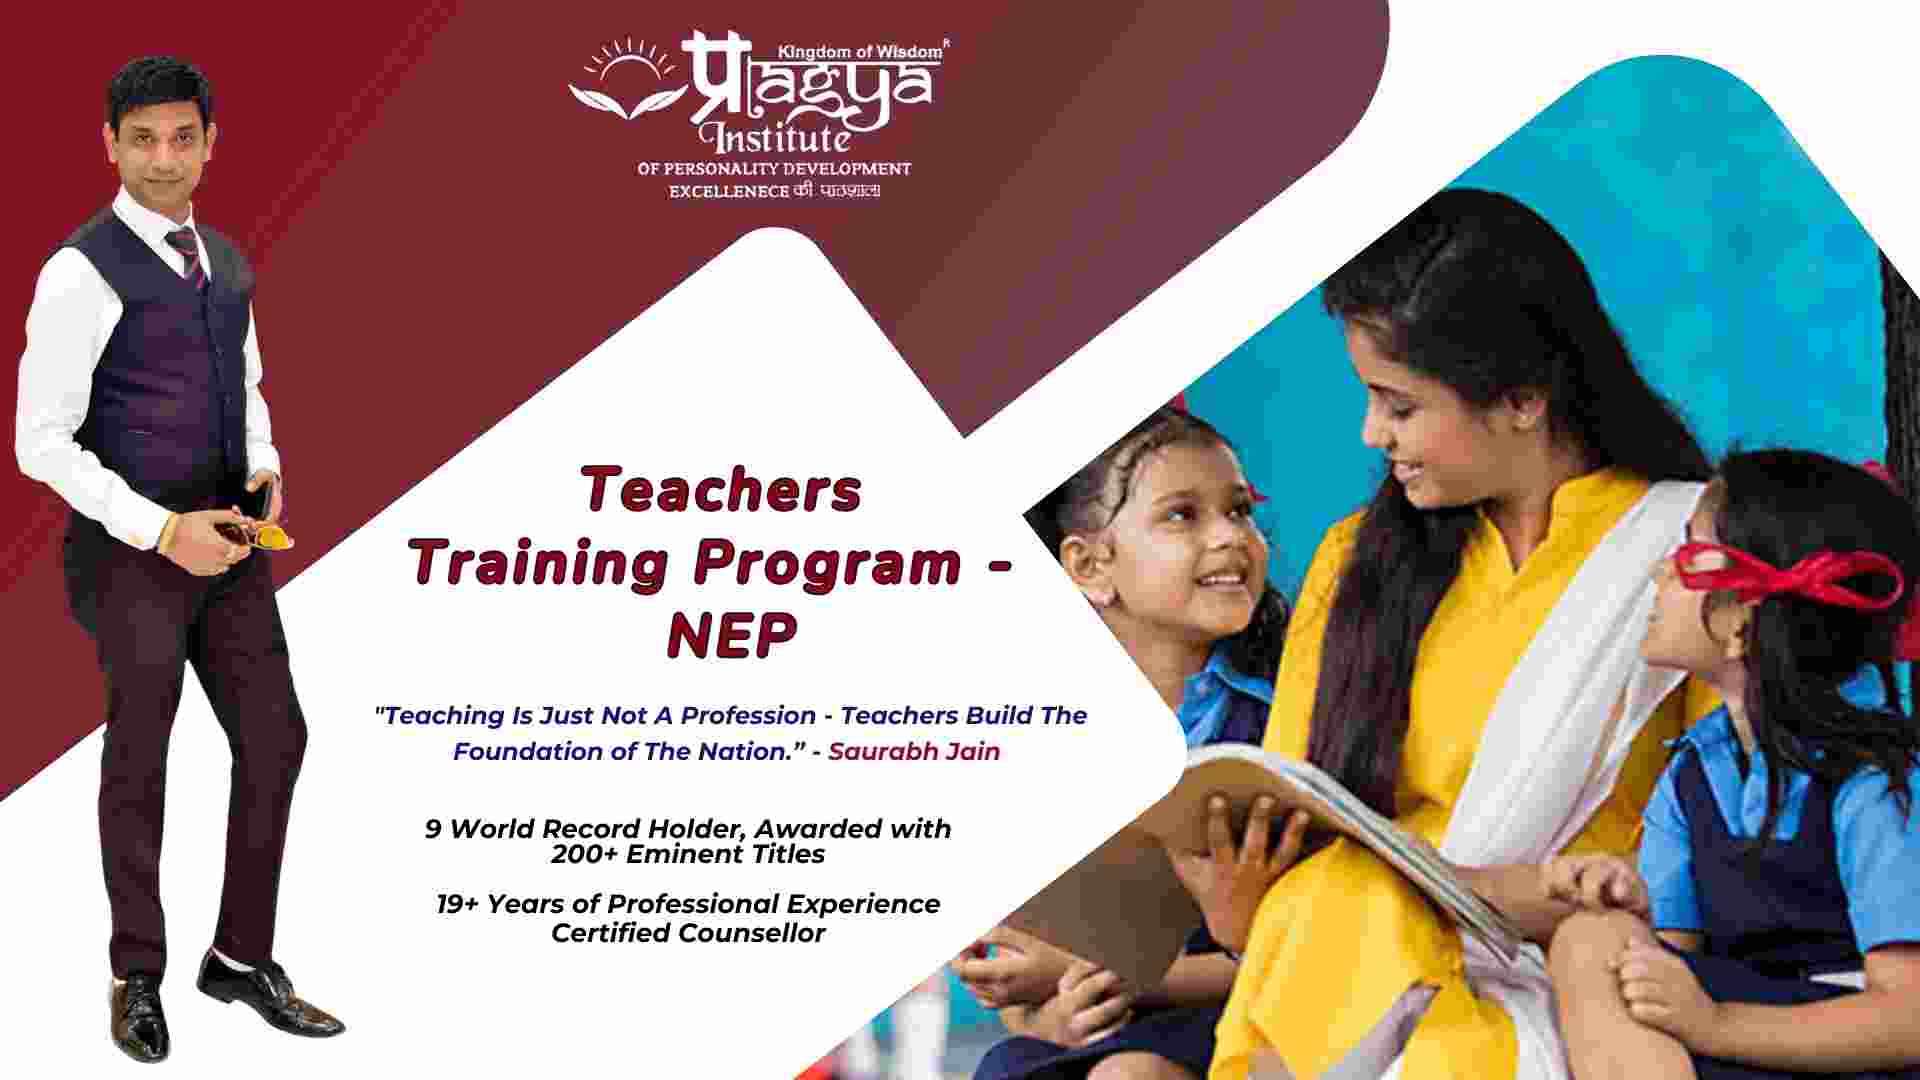 Teachers Training Program - NEP